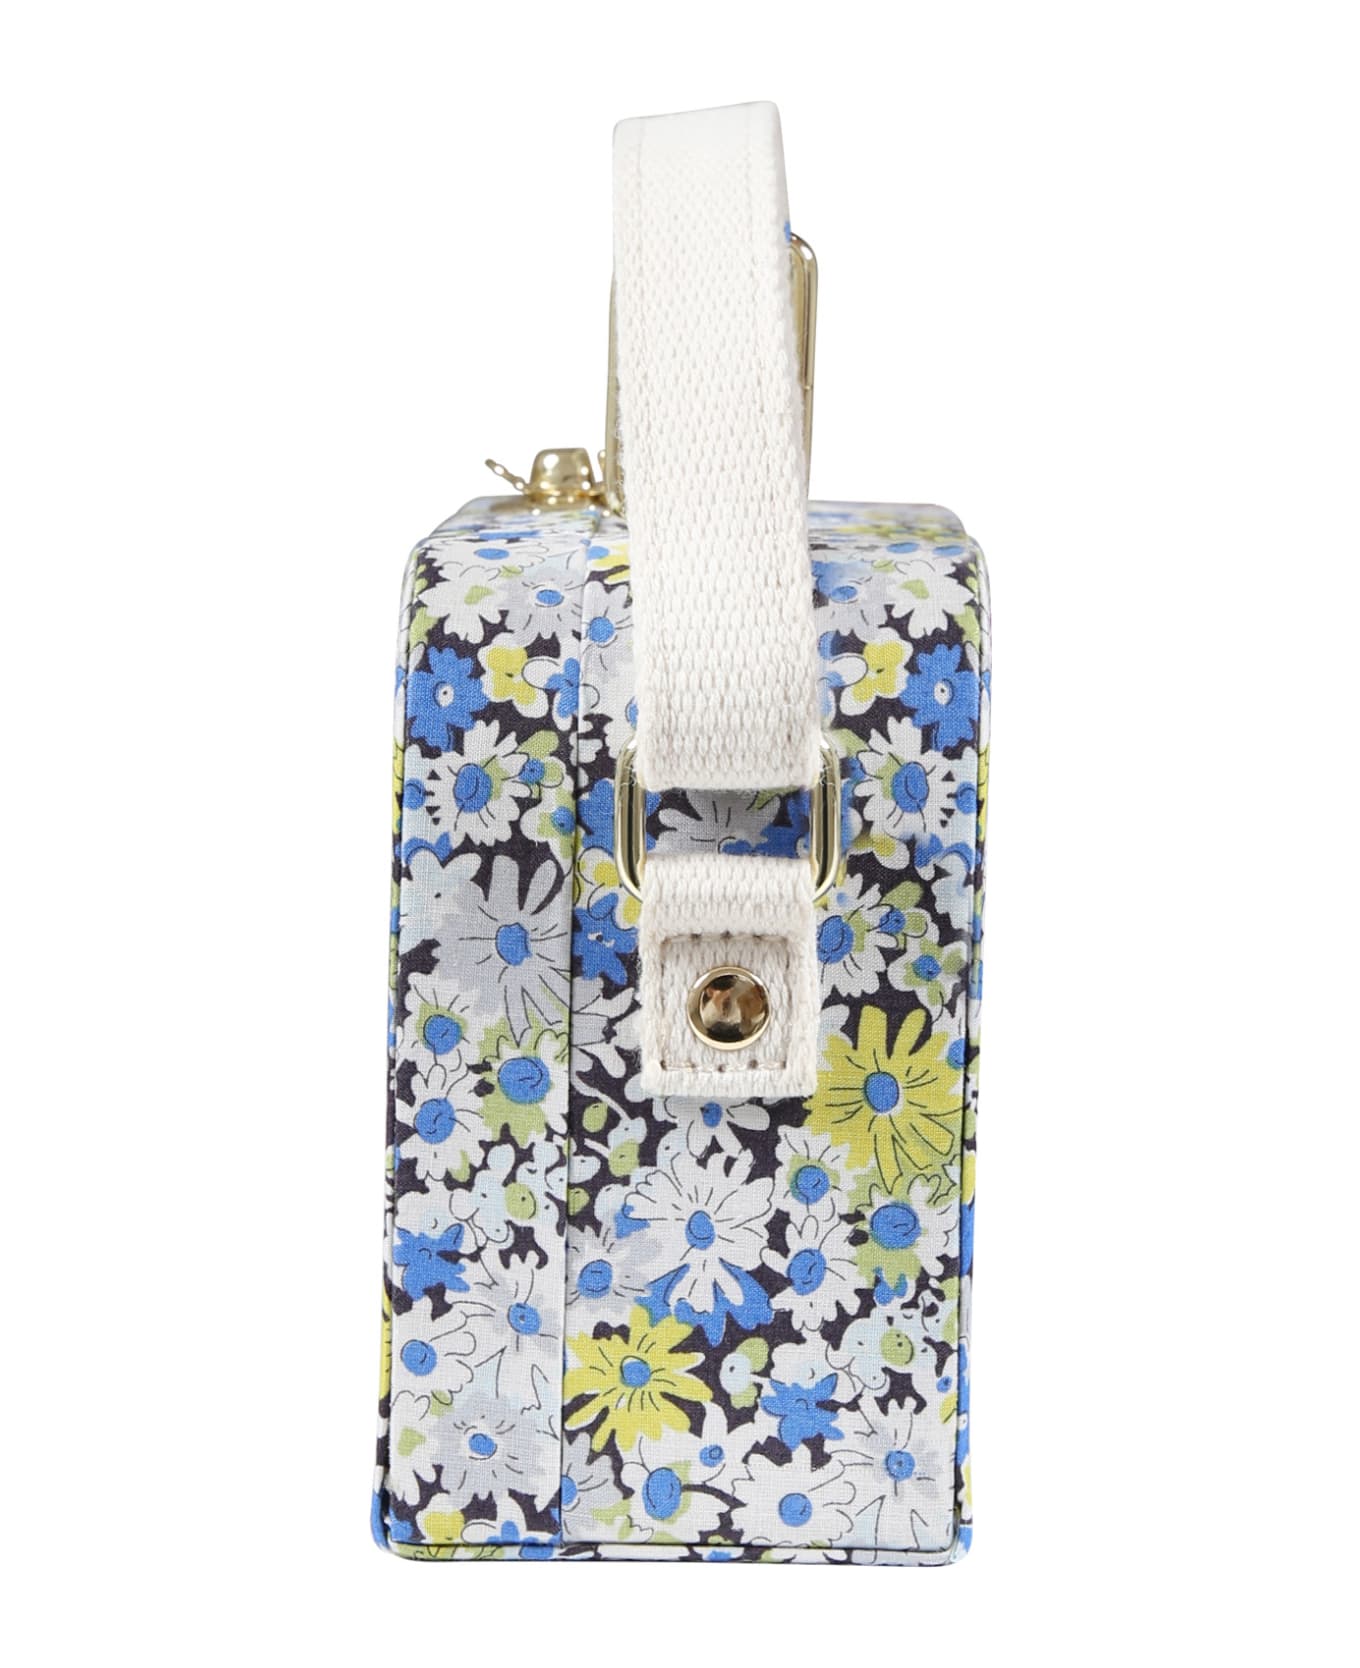 Bonpoint Light Blue Bag For Girl With Floral Pattern - Light Blue アクセサリー＆ギフト